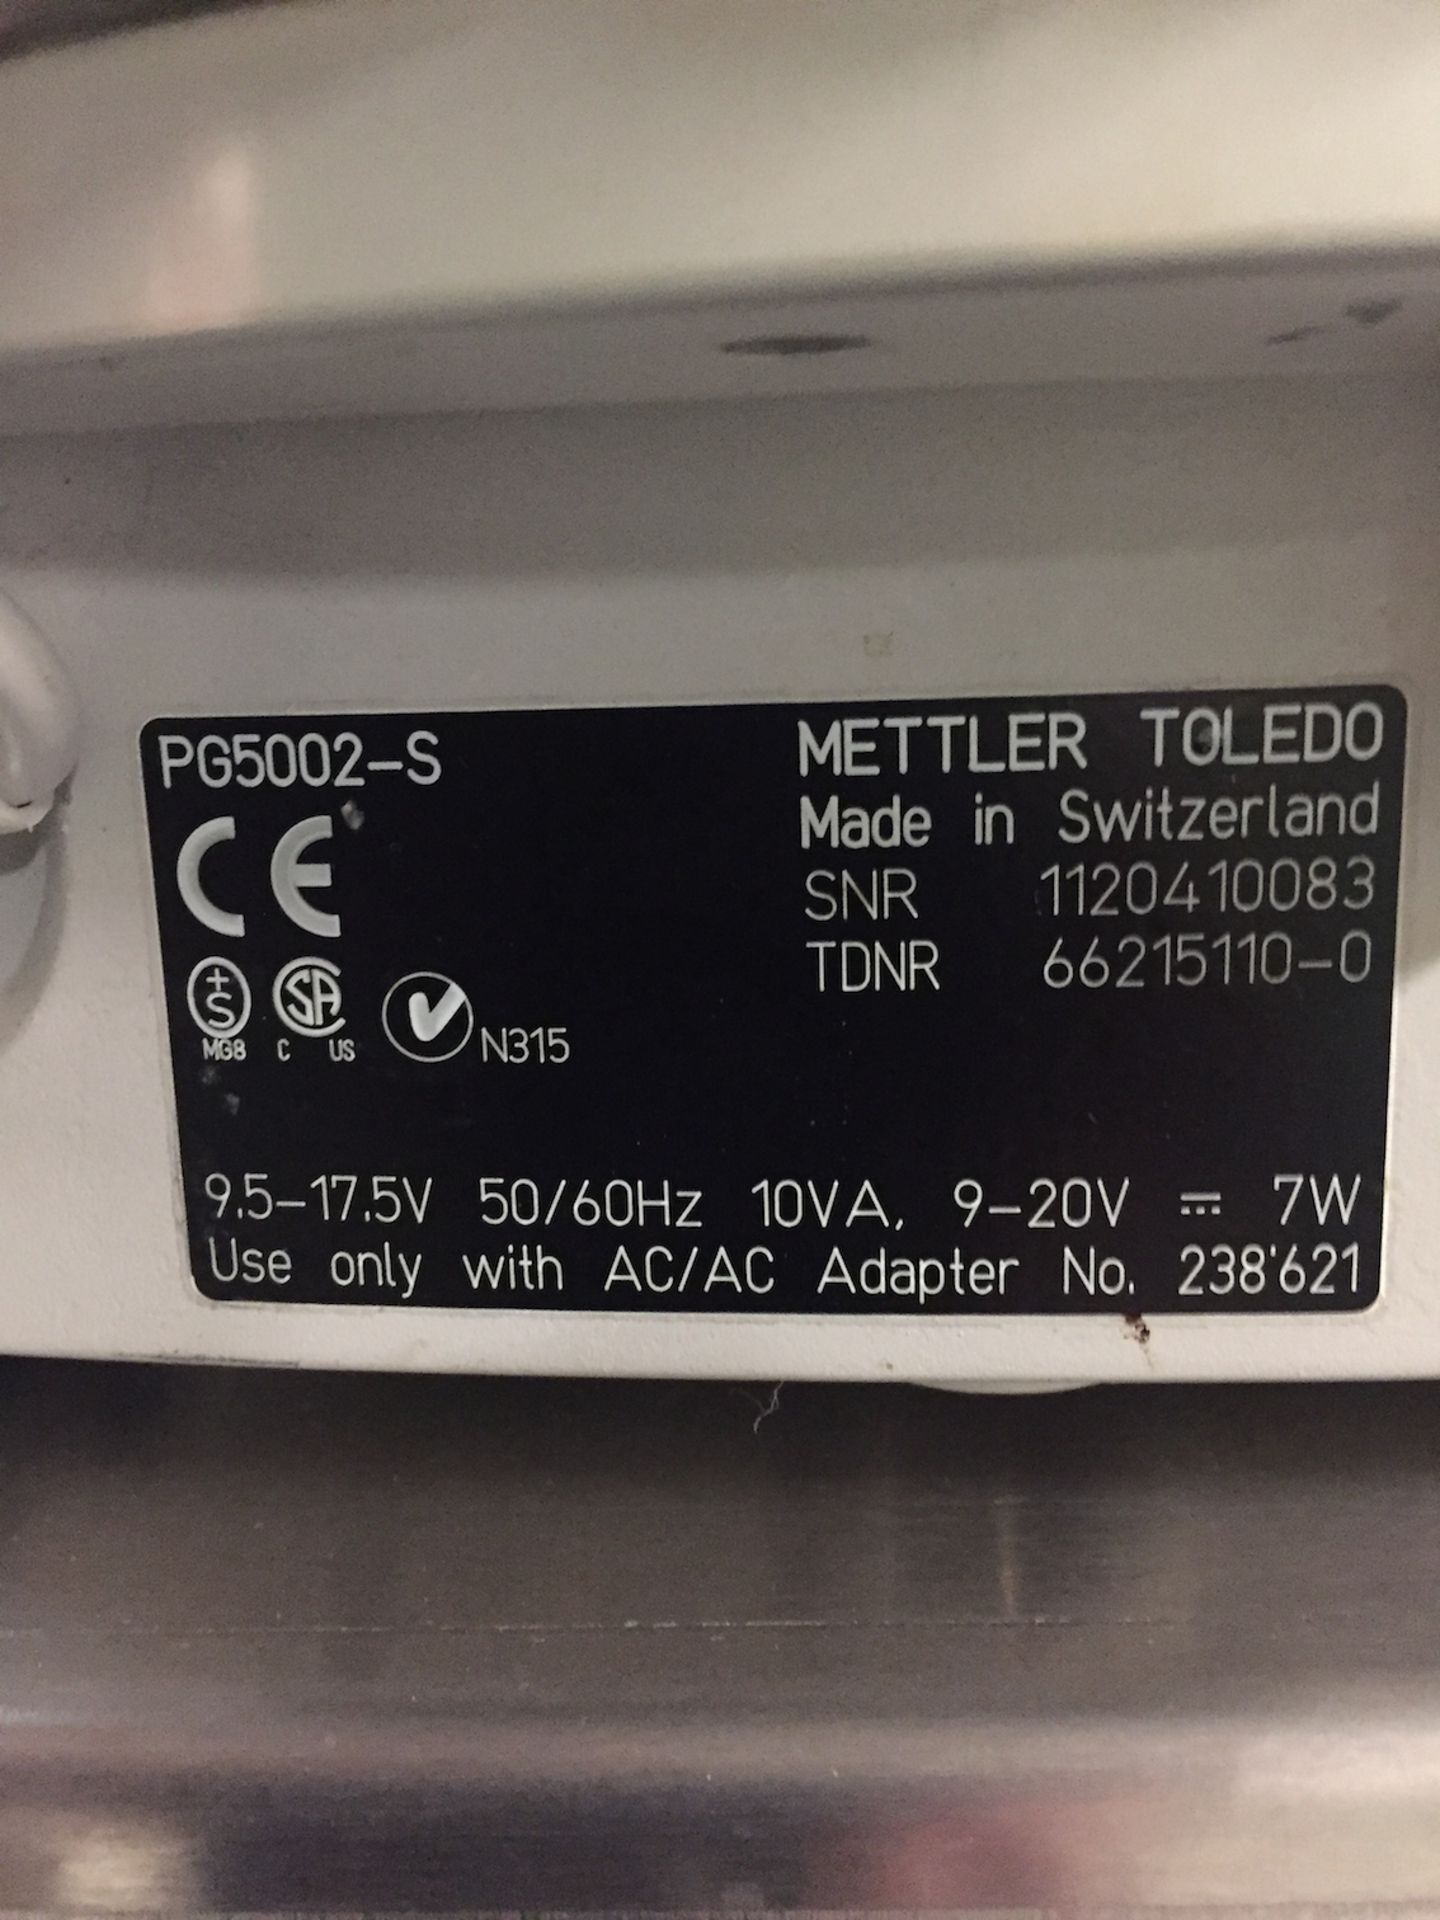 Mettler Toledo Scale Pg5002-S, SNR 1120410083 - Image 3 of 4